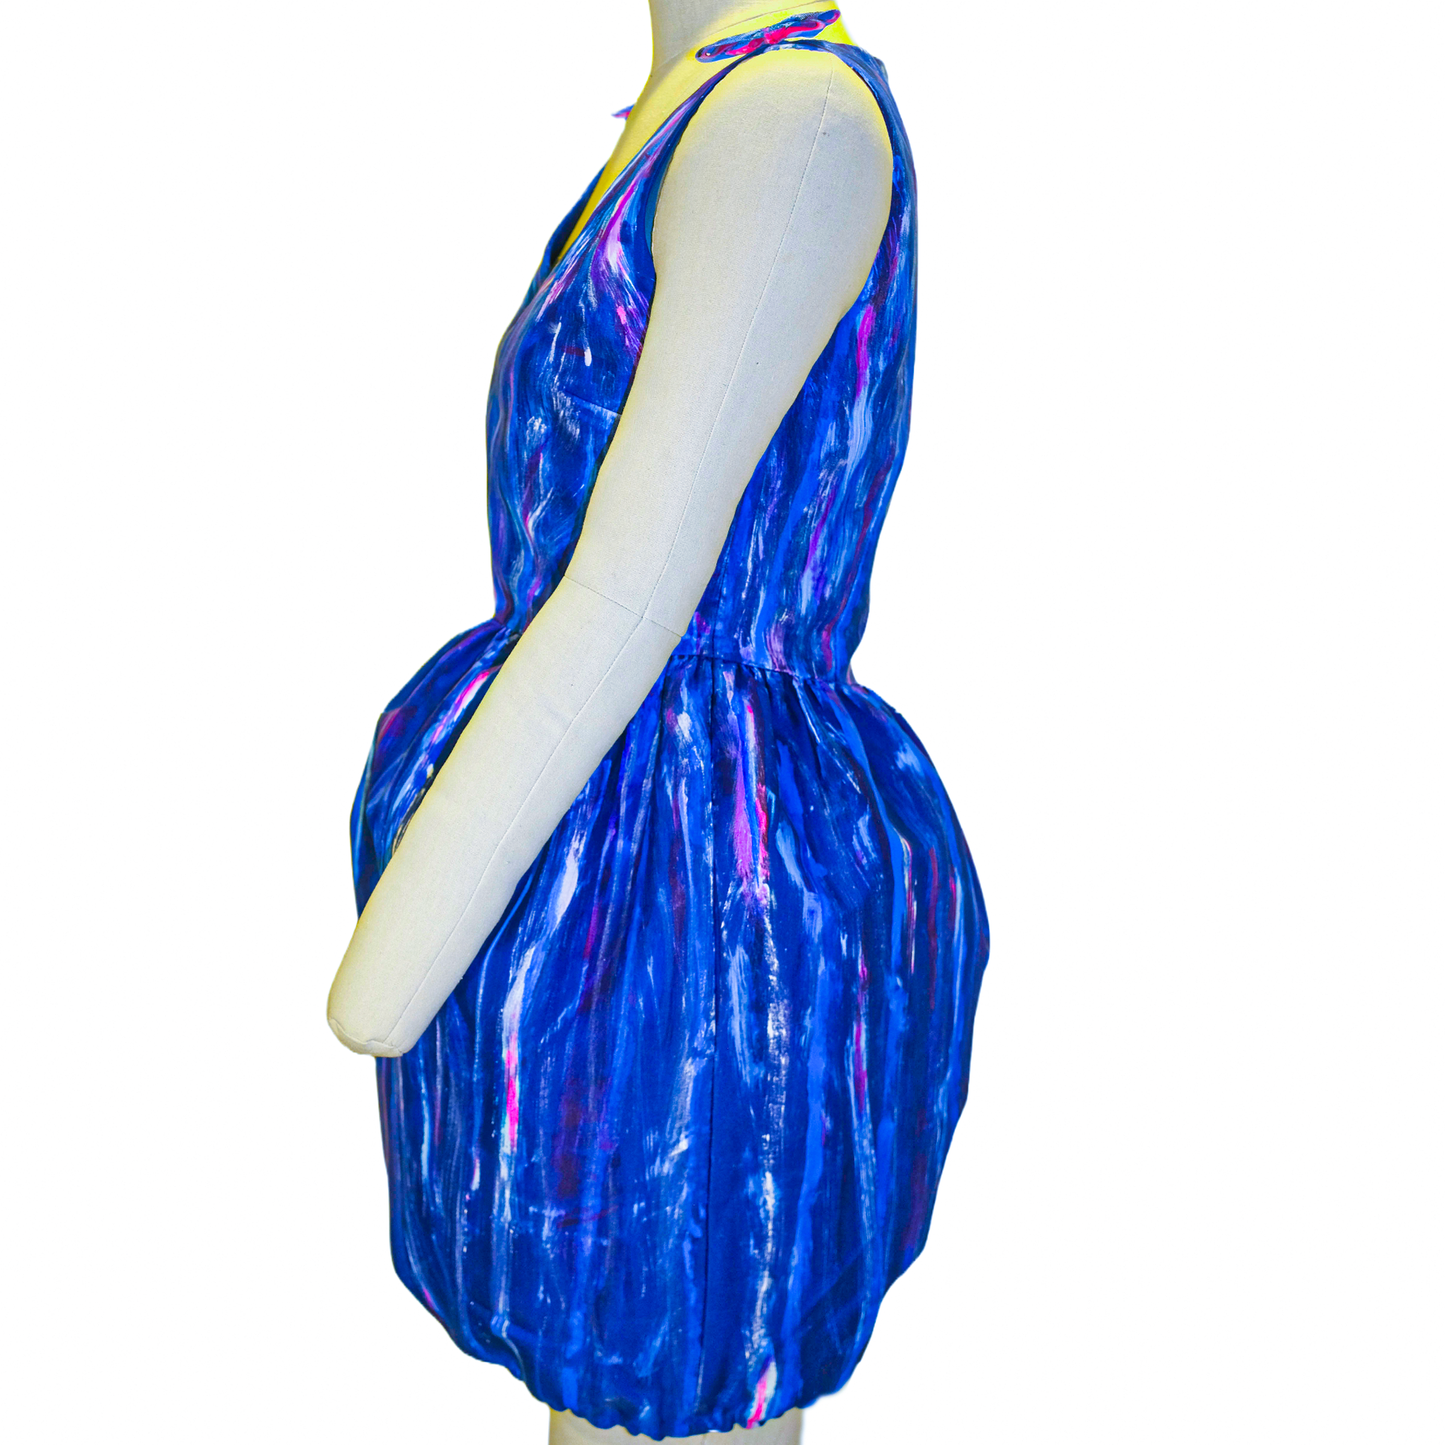 "Cold Hearted" Size 4 - Kate Spade Bubble Dress - Hand-Painted by Skye De La Rosa